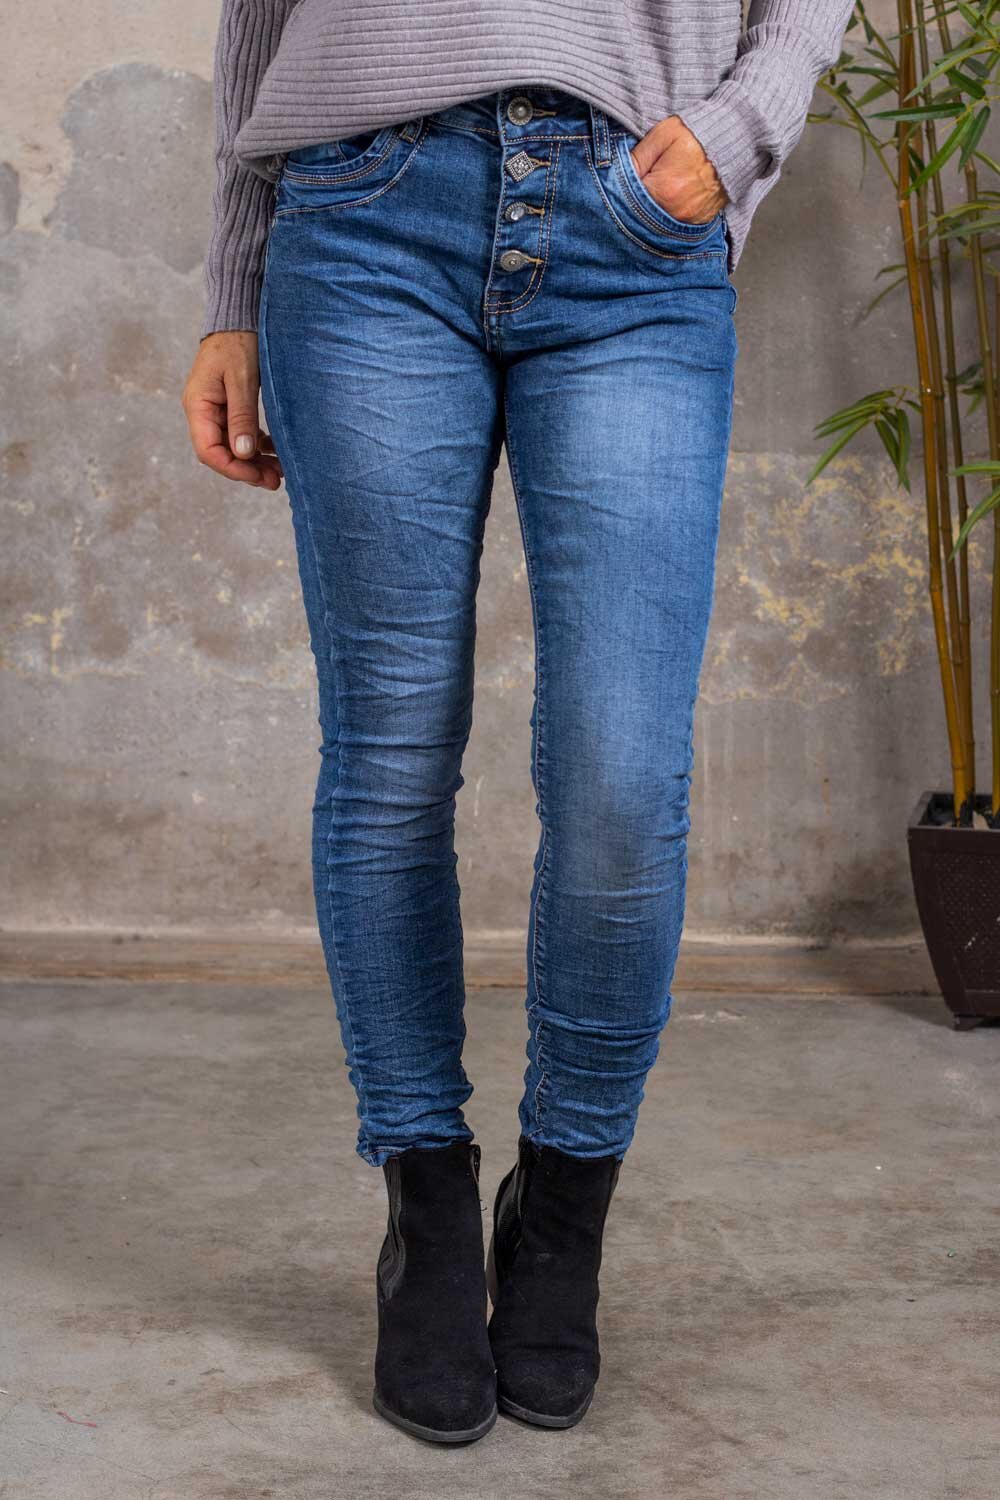 Jeans JW22204 - Knappmix - Denim